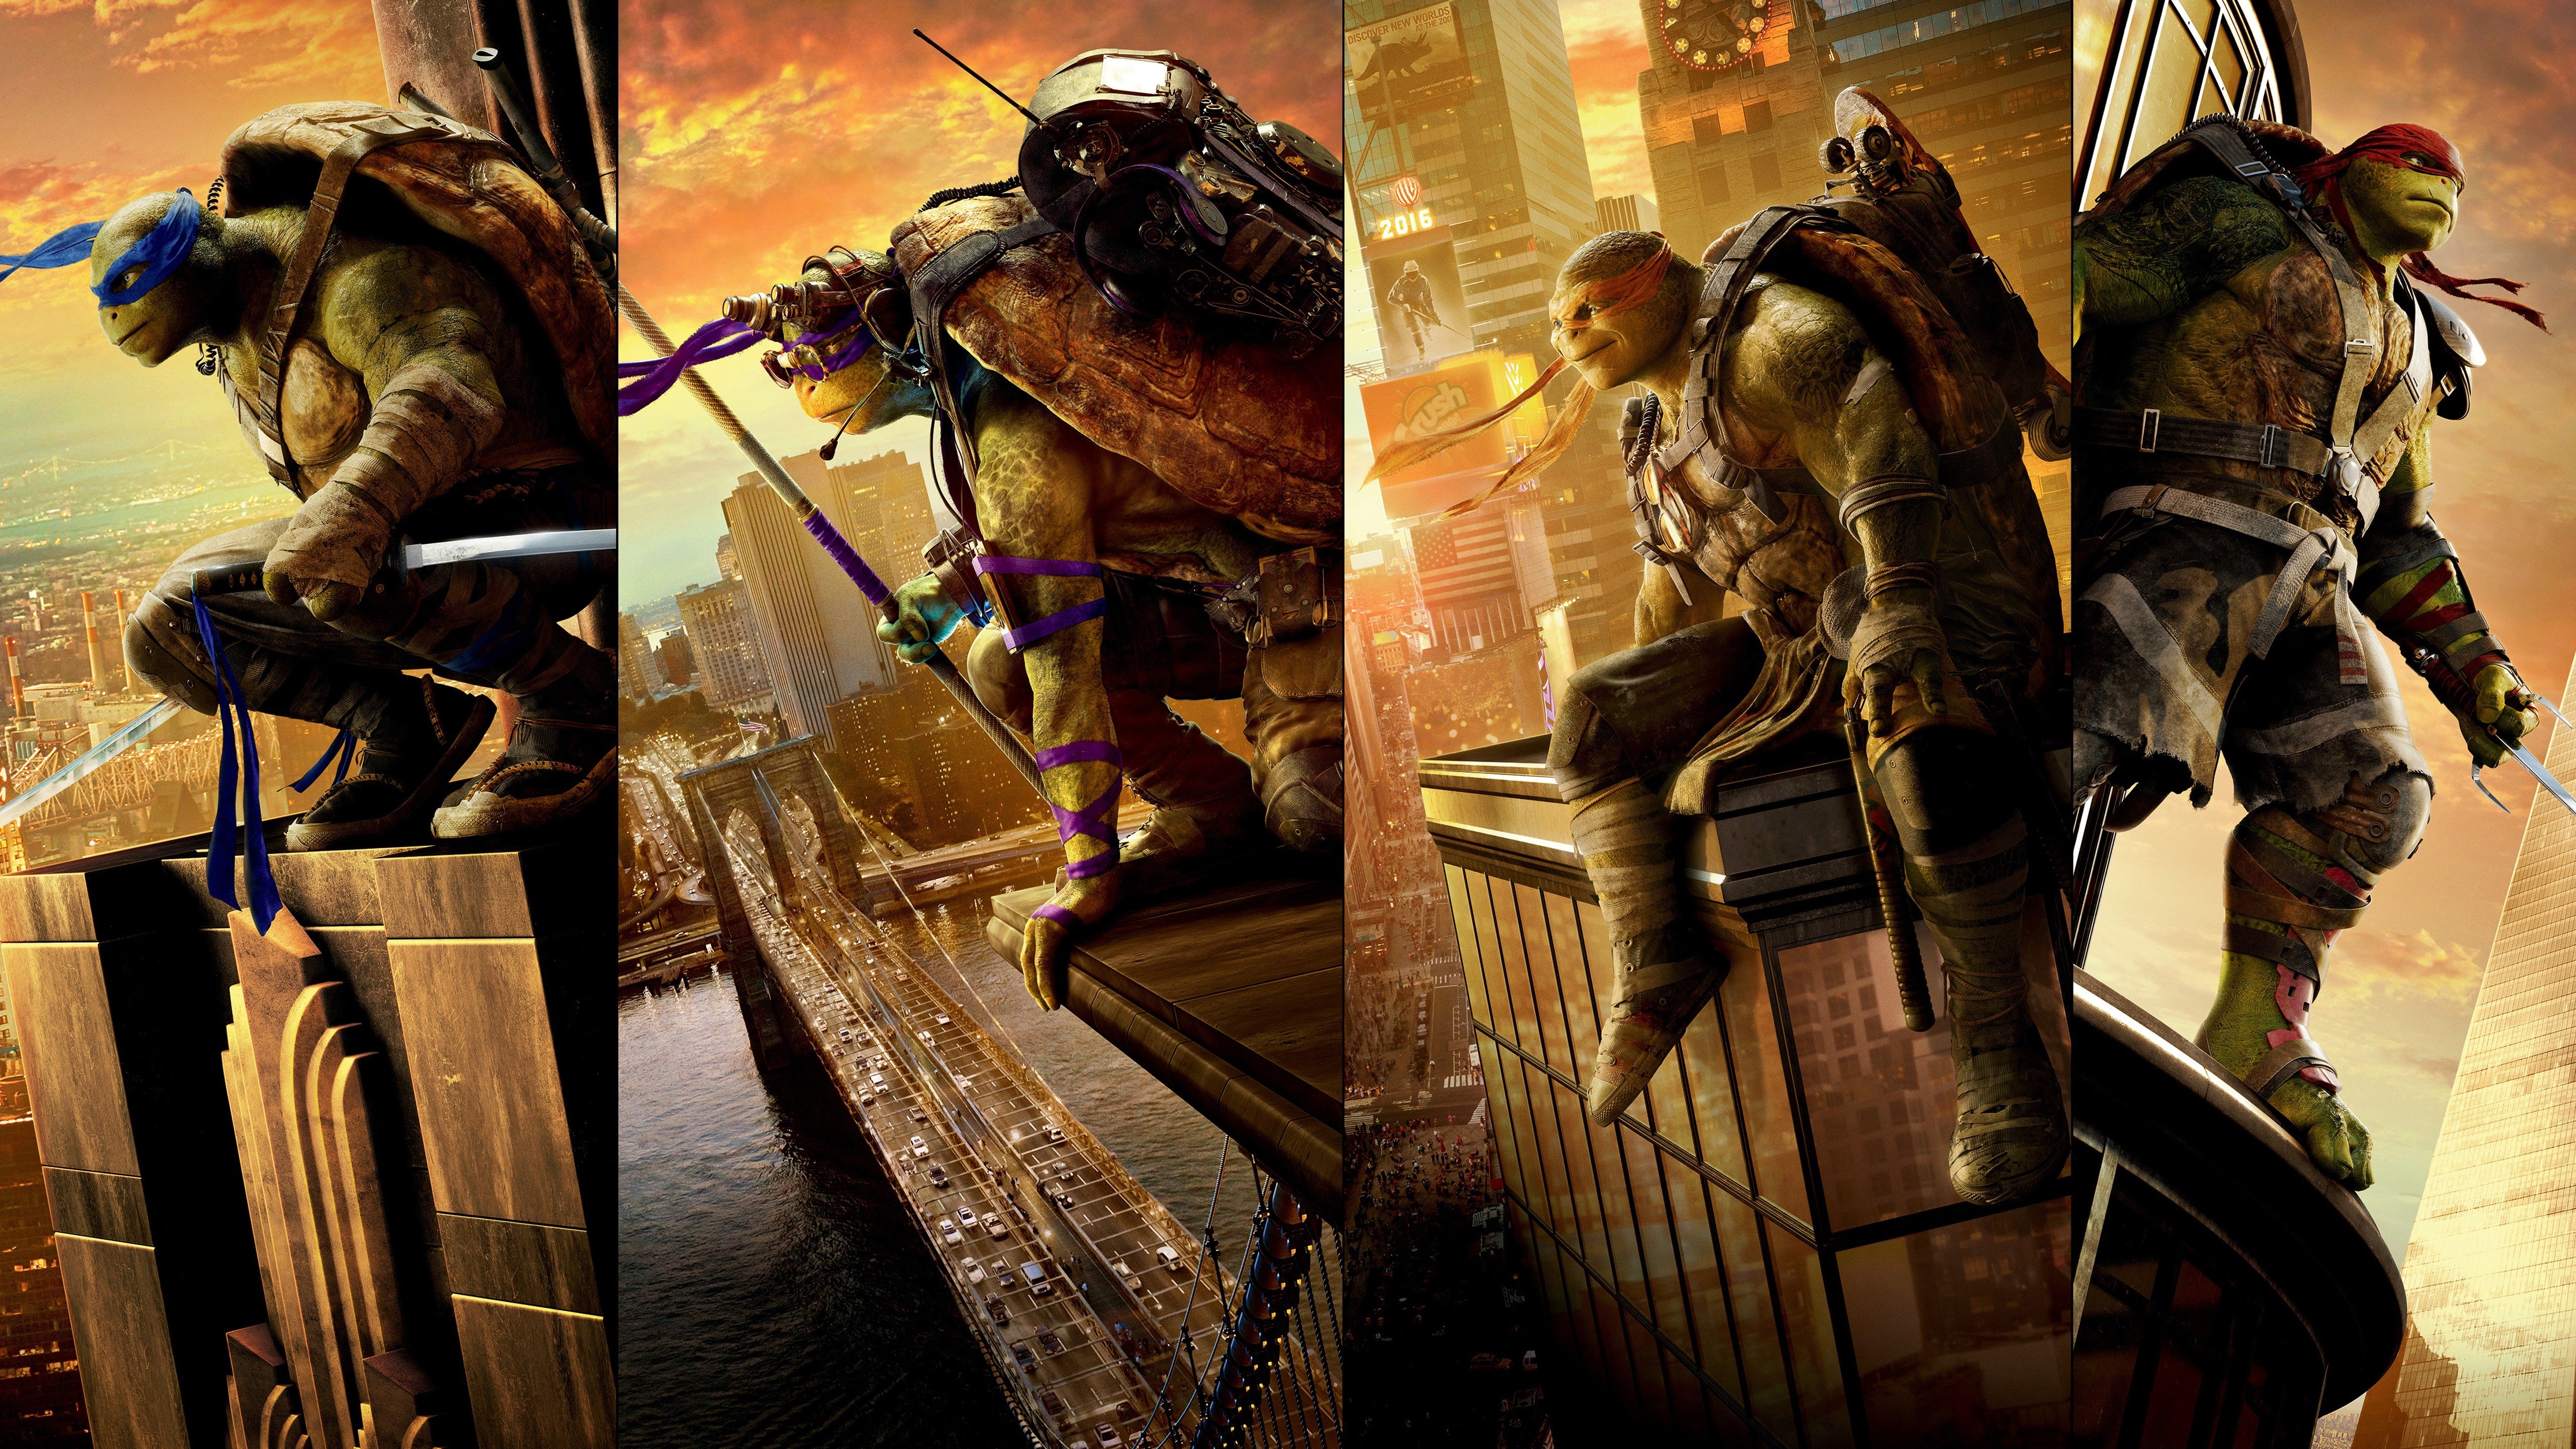 teenage, Mutant, Ninja, Turtles, Fantasy, Sci fi, Adventure, Warrior, Animation, Action, Fighting, Tmnt, Poster Wallpaper